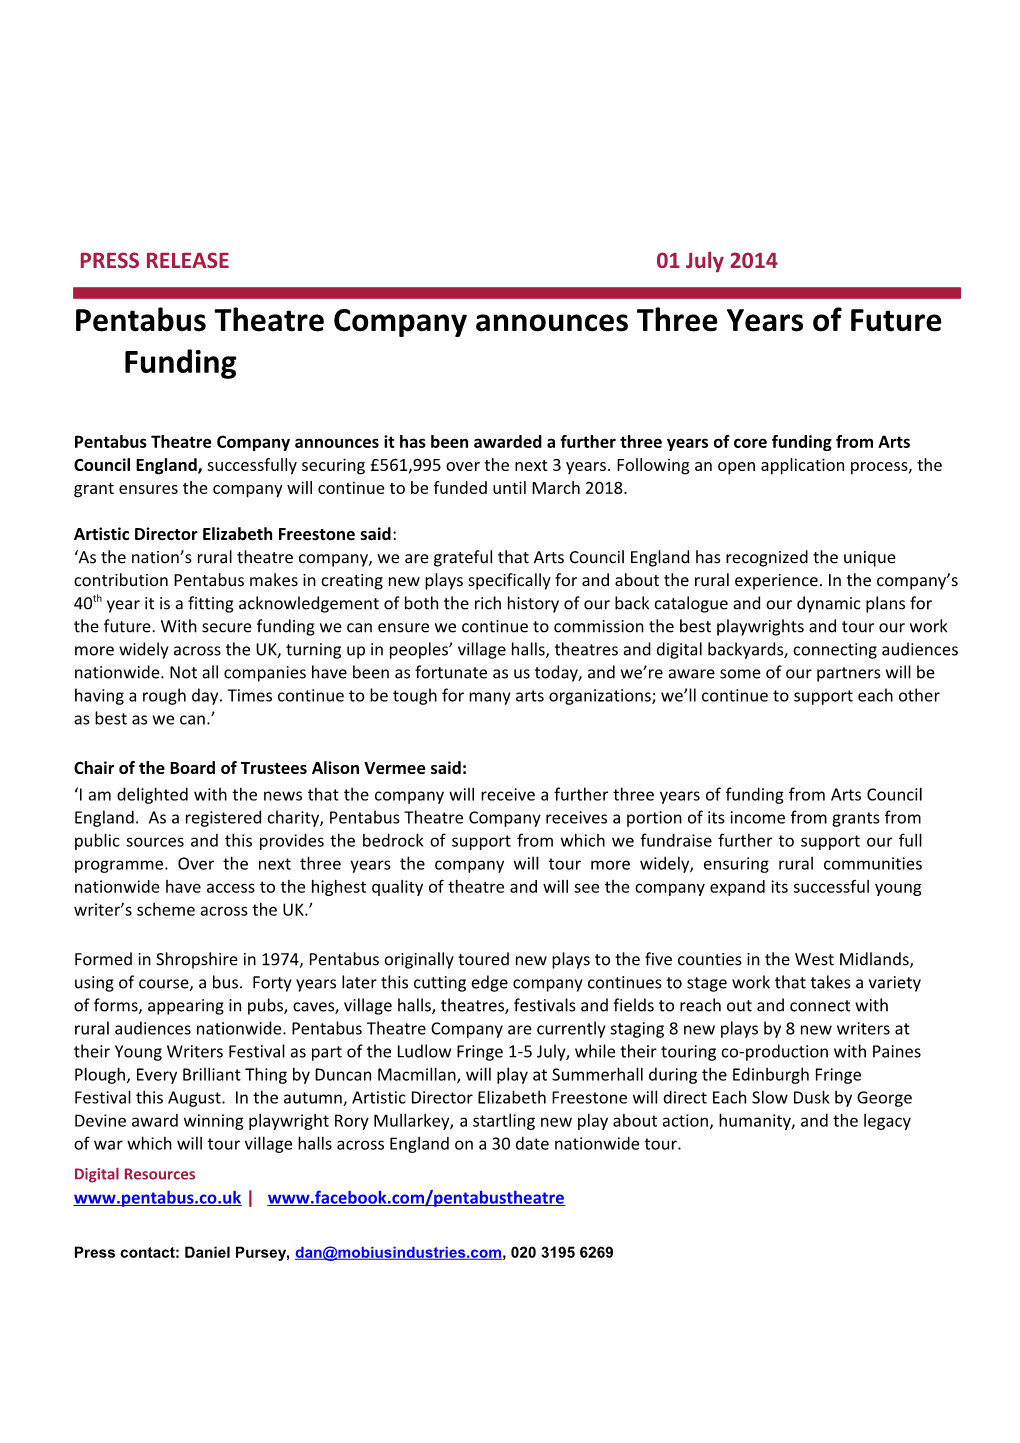 Pentabus Theatre Company Announces Three Years of Future Funding